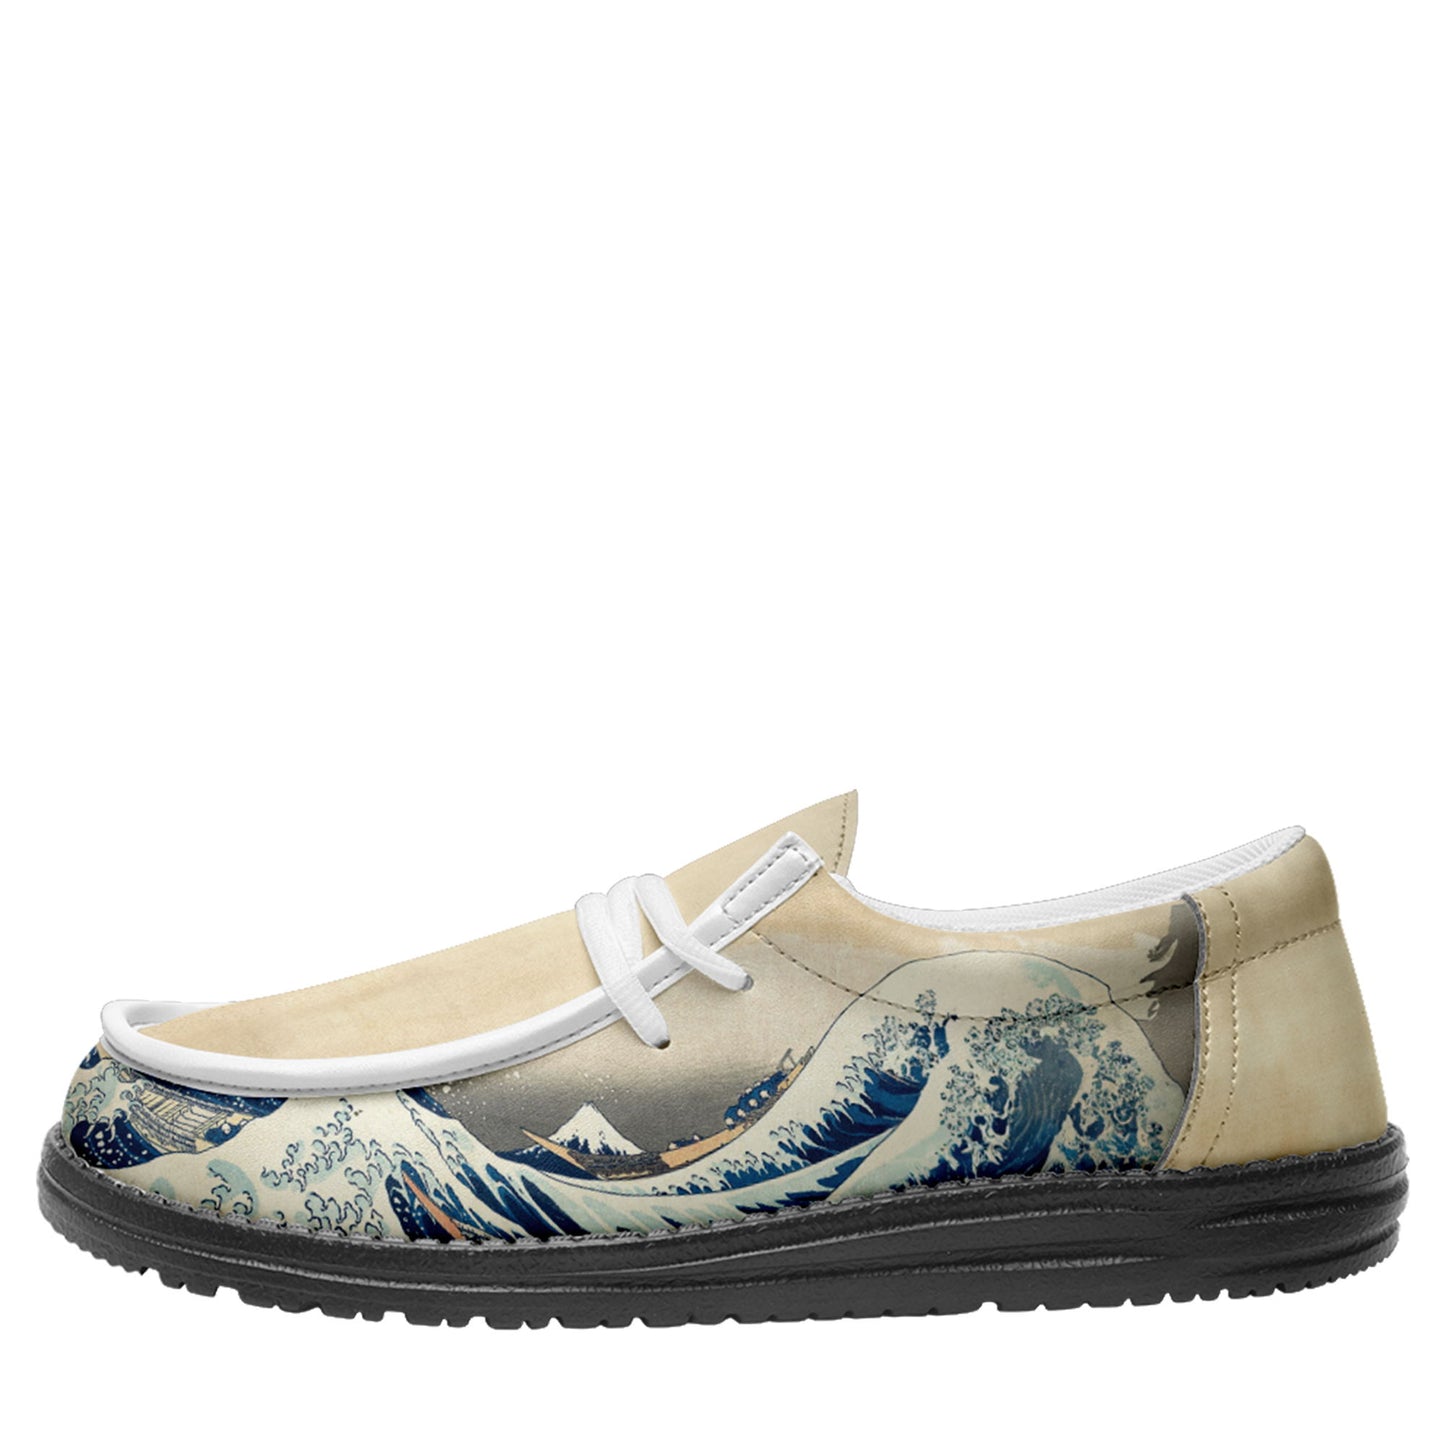 customize printed yo bro shoes ukiyo-e katsushika hokusai's the great wave off kanagawa casual shoes white shoelace 2